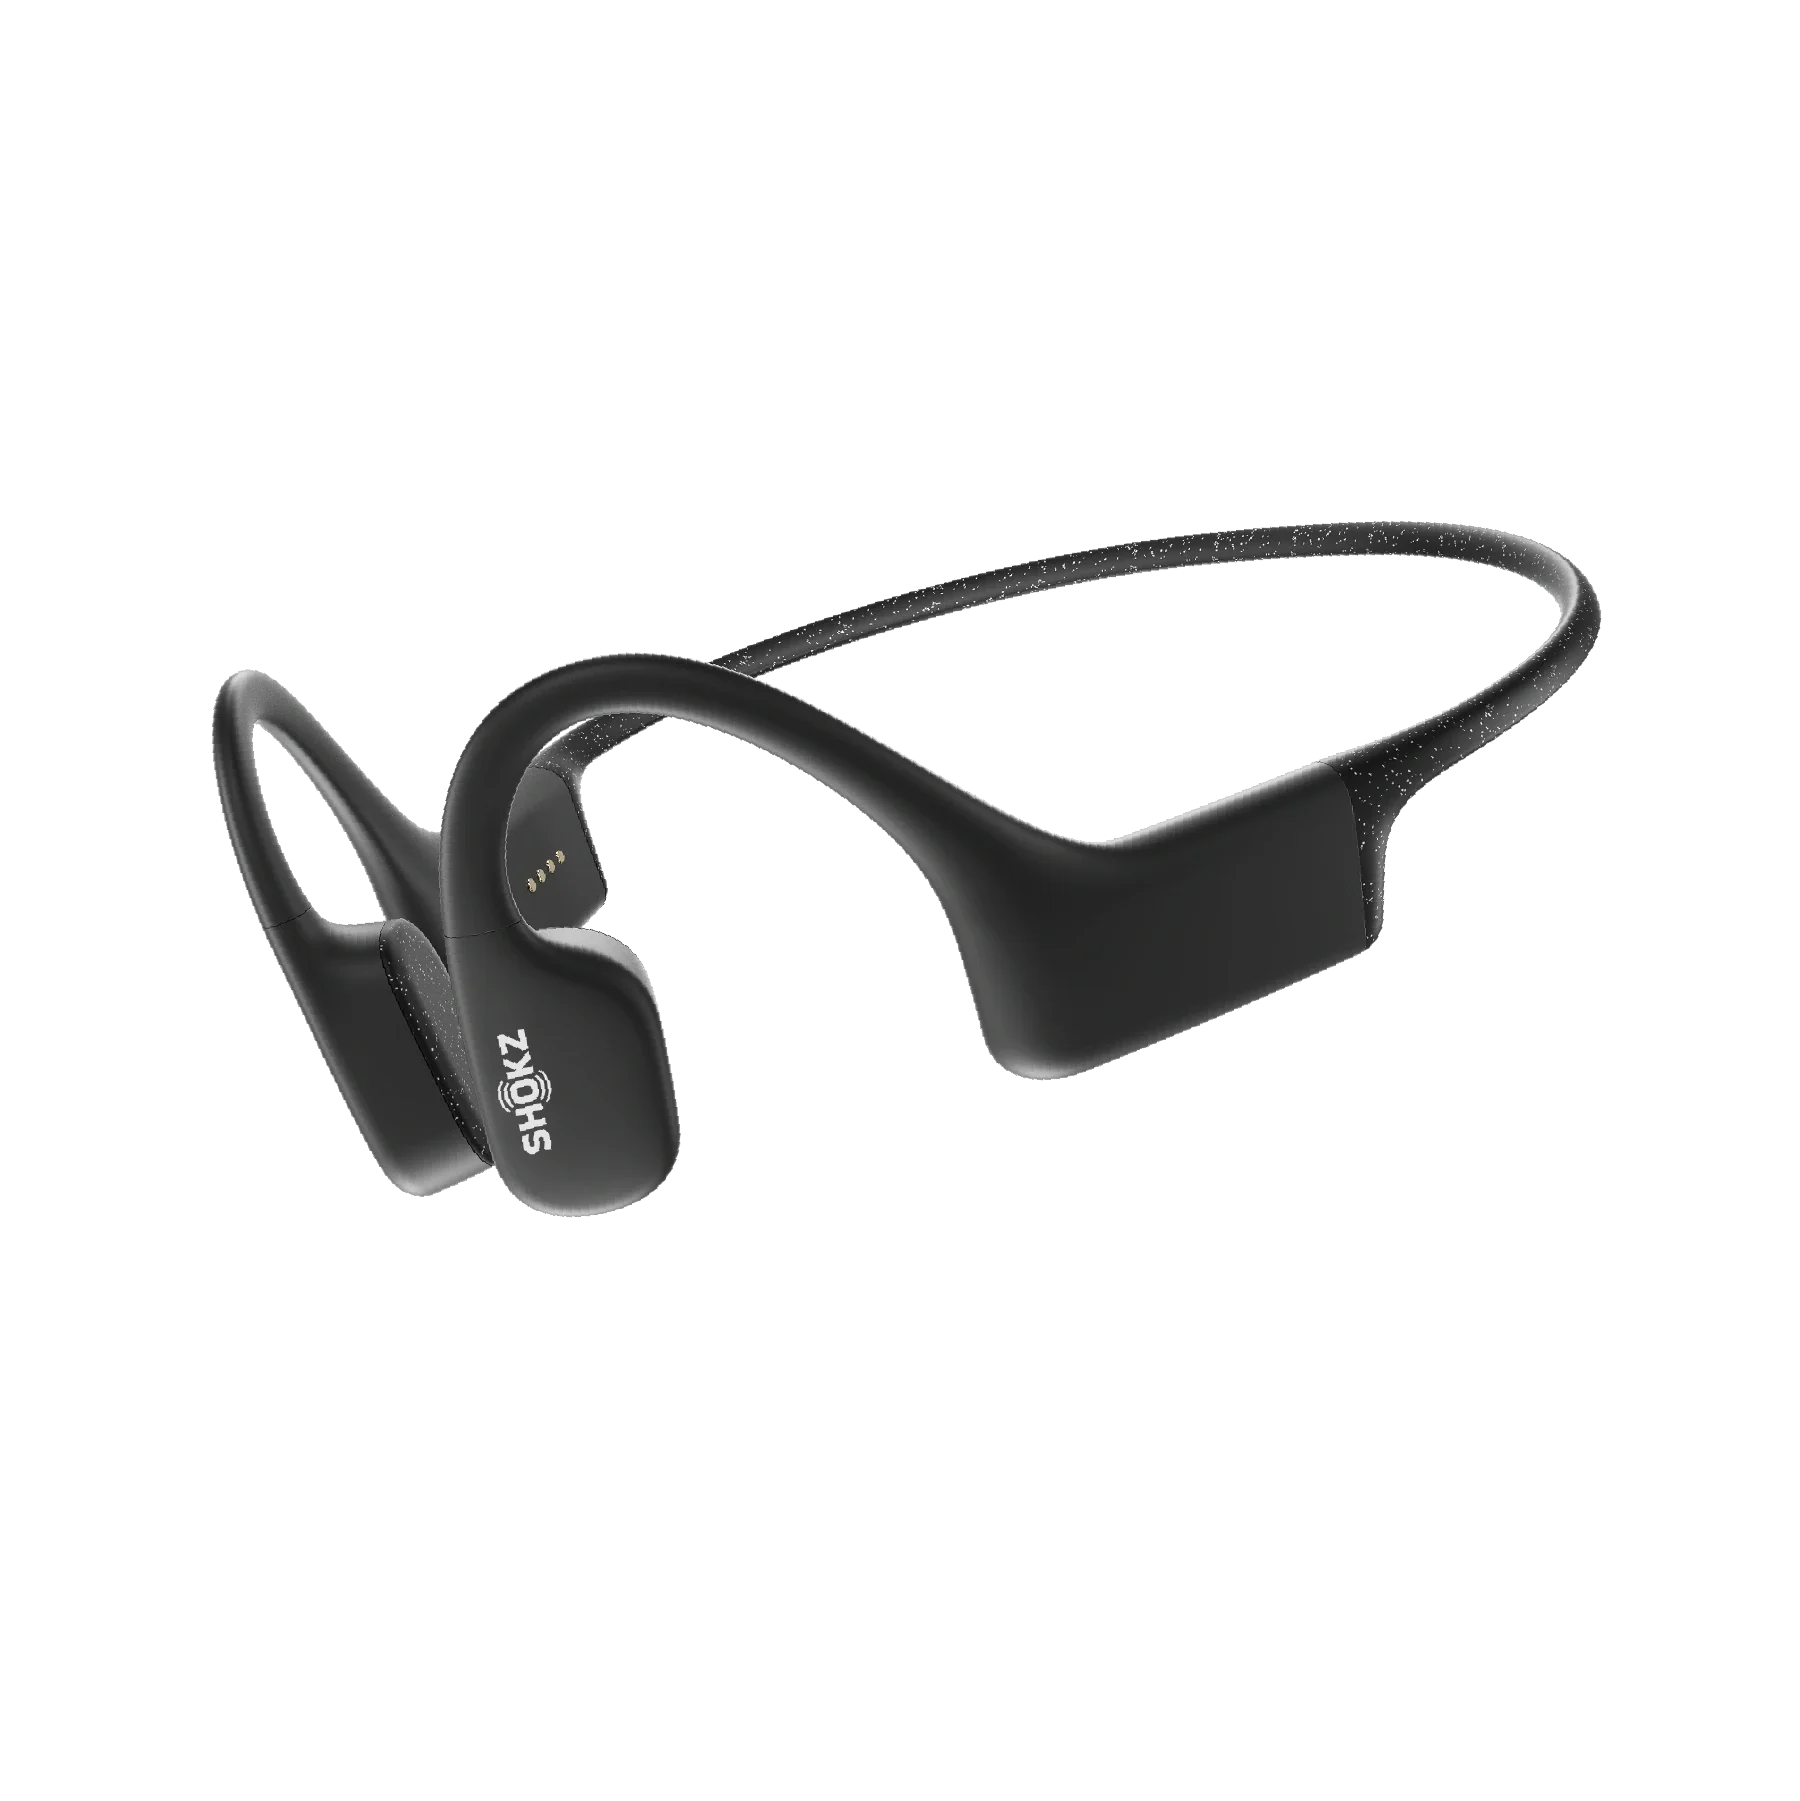 Aftershokz Aeropex Review 2020: Bone Conduction Headphones for Running